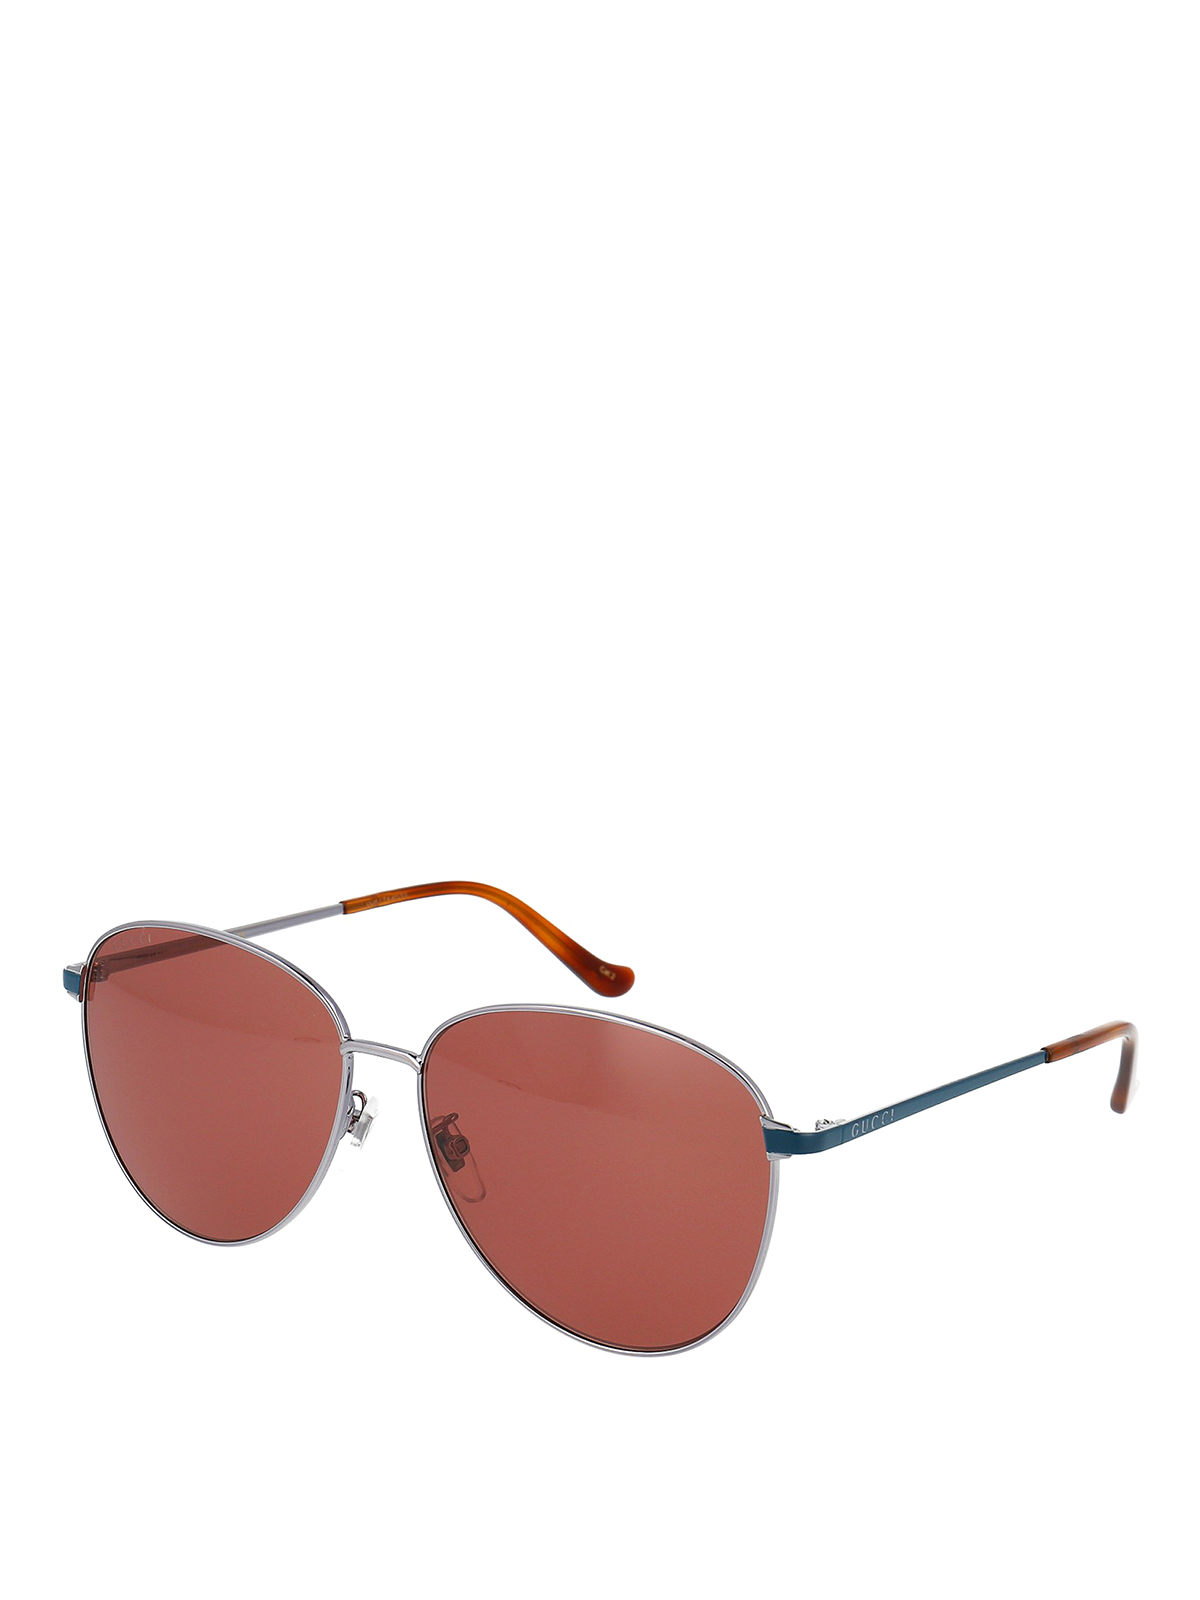 red gucci aviator sunglasses